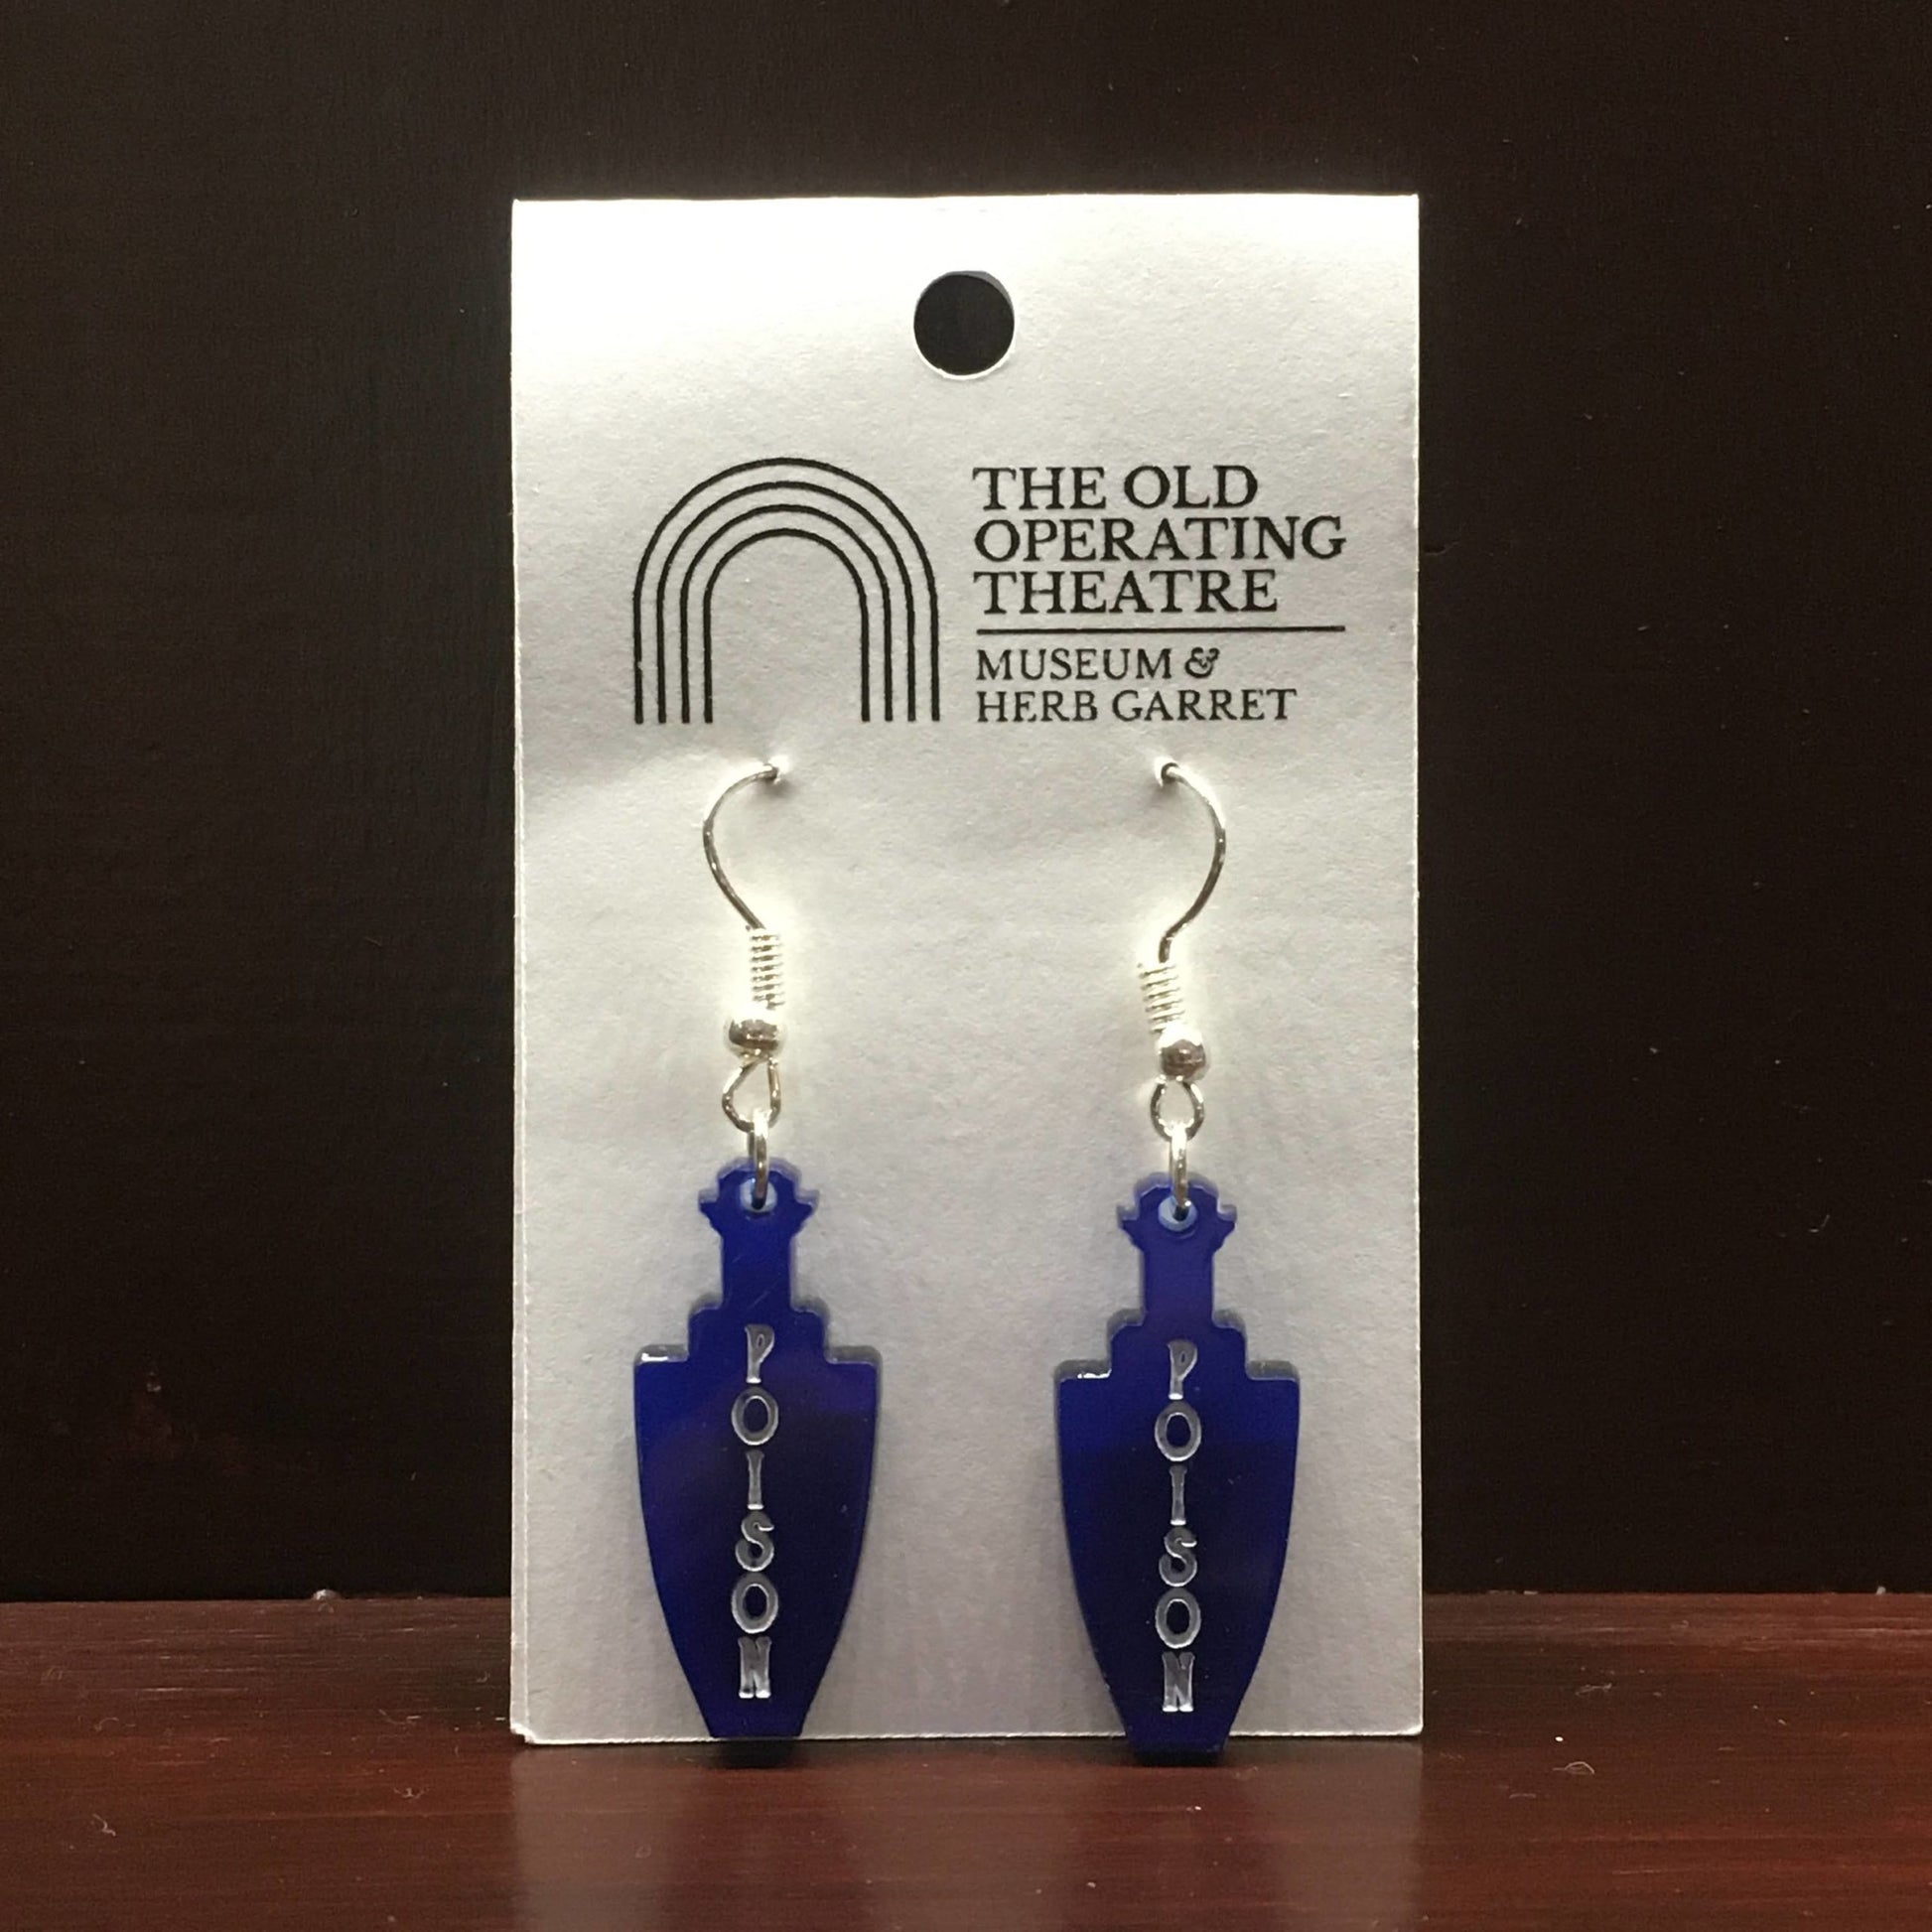 Pair of blue dangle earrings in the shape of a bottle. 'Poison' is written vertically on the bottle.